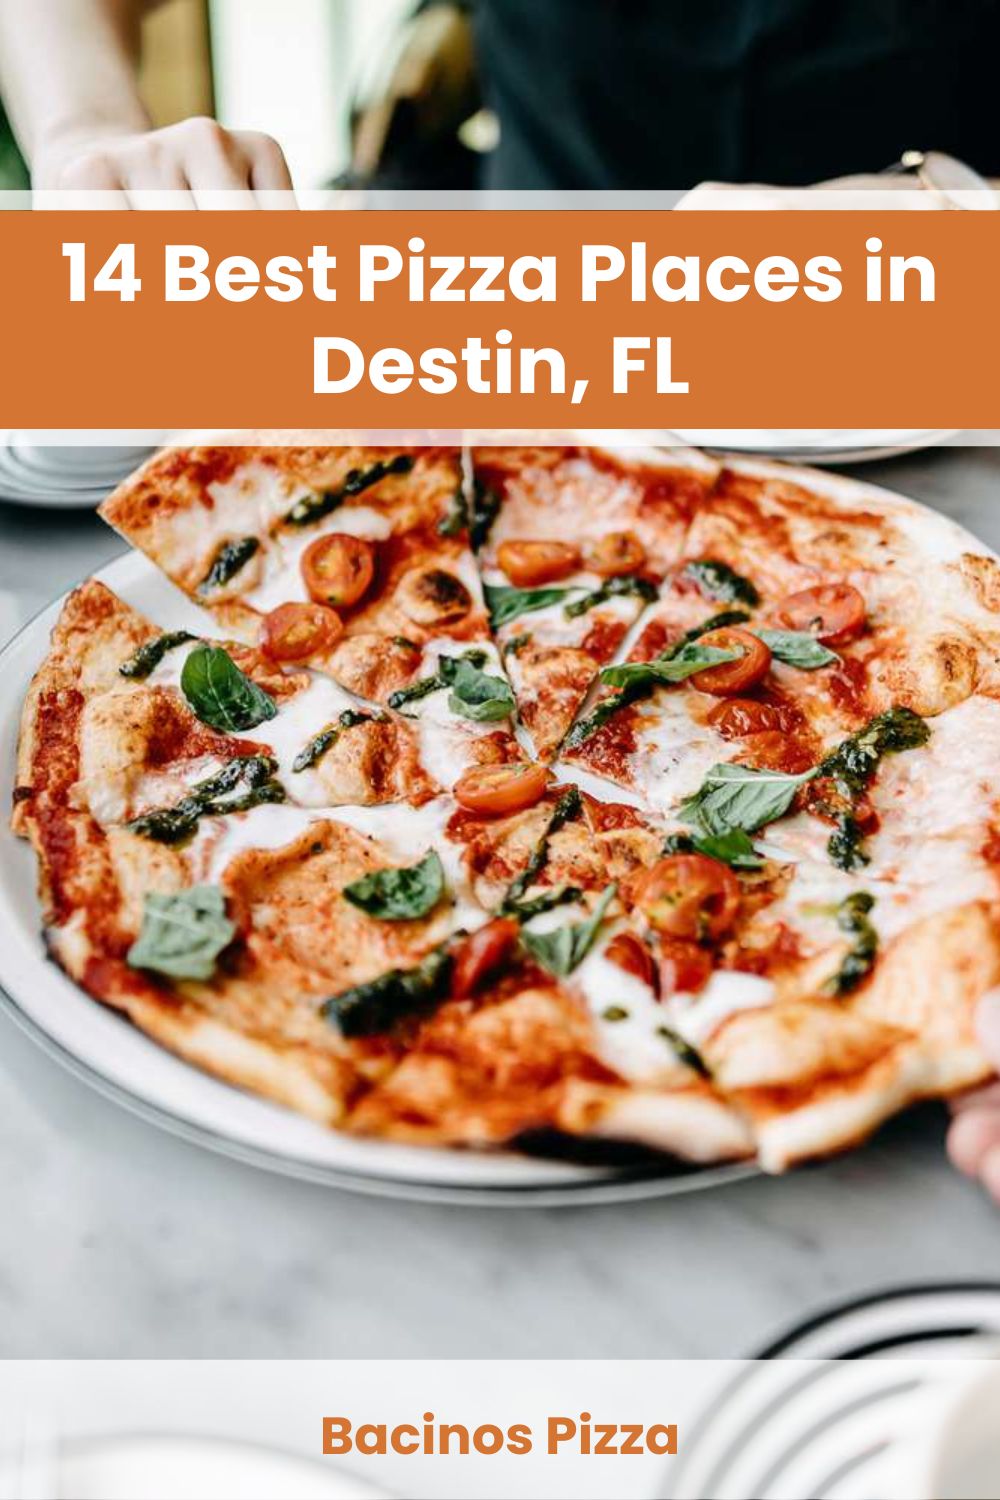 Best Pizza Places in Destin